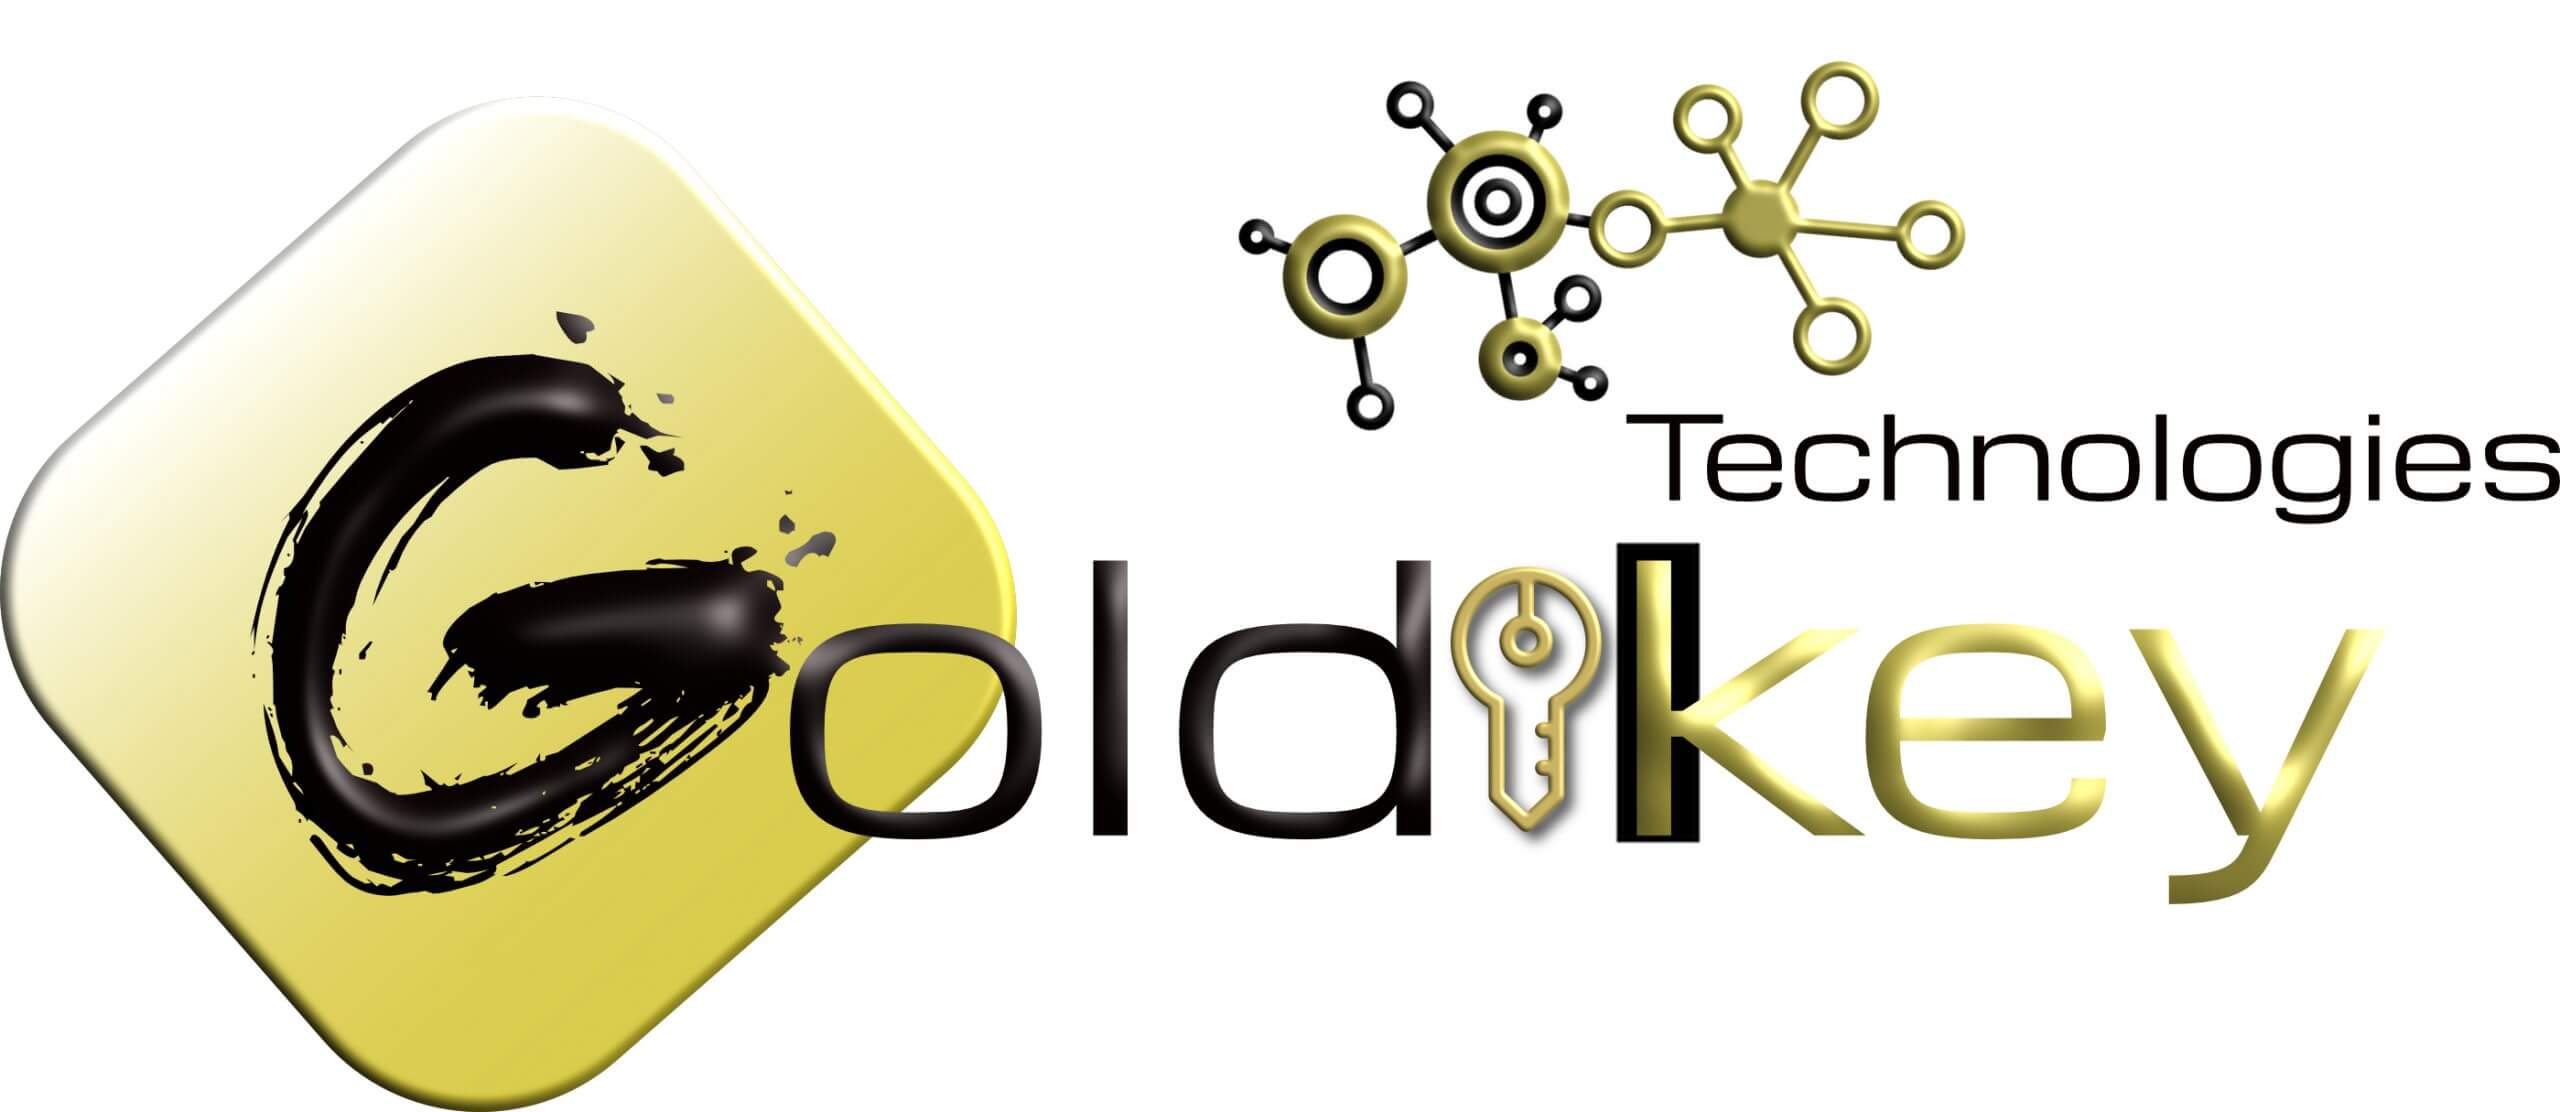 Goldkey Technologies